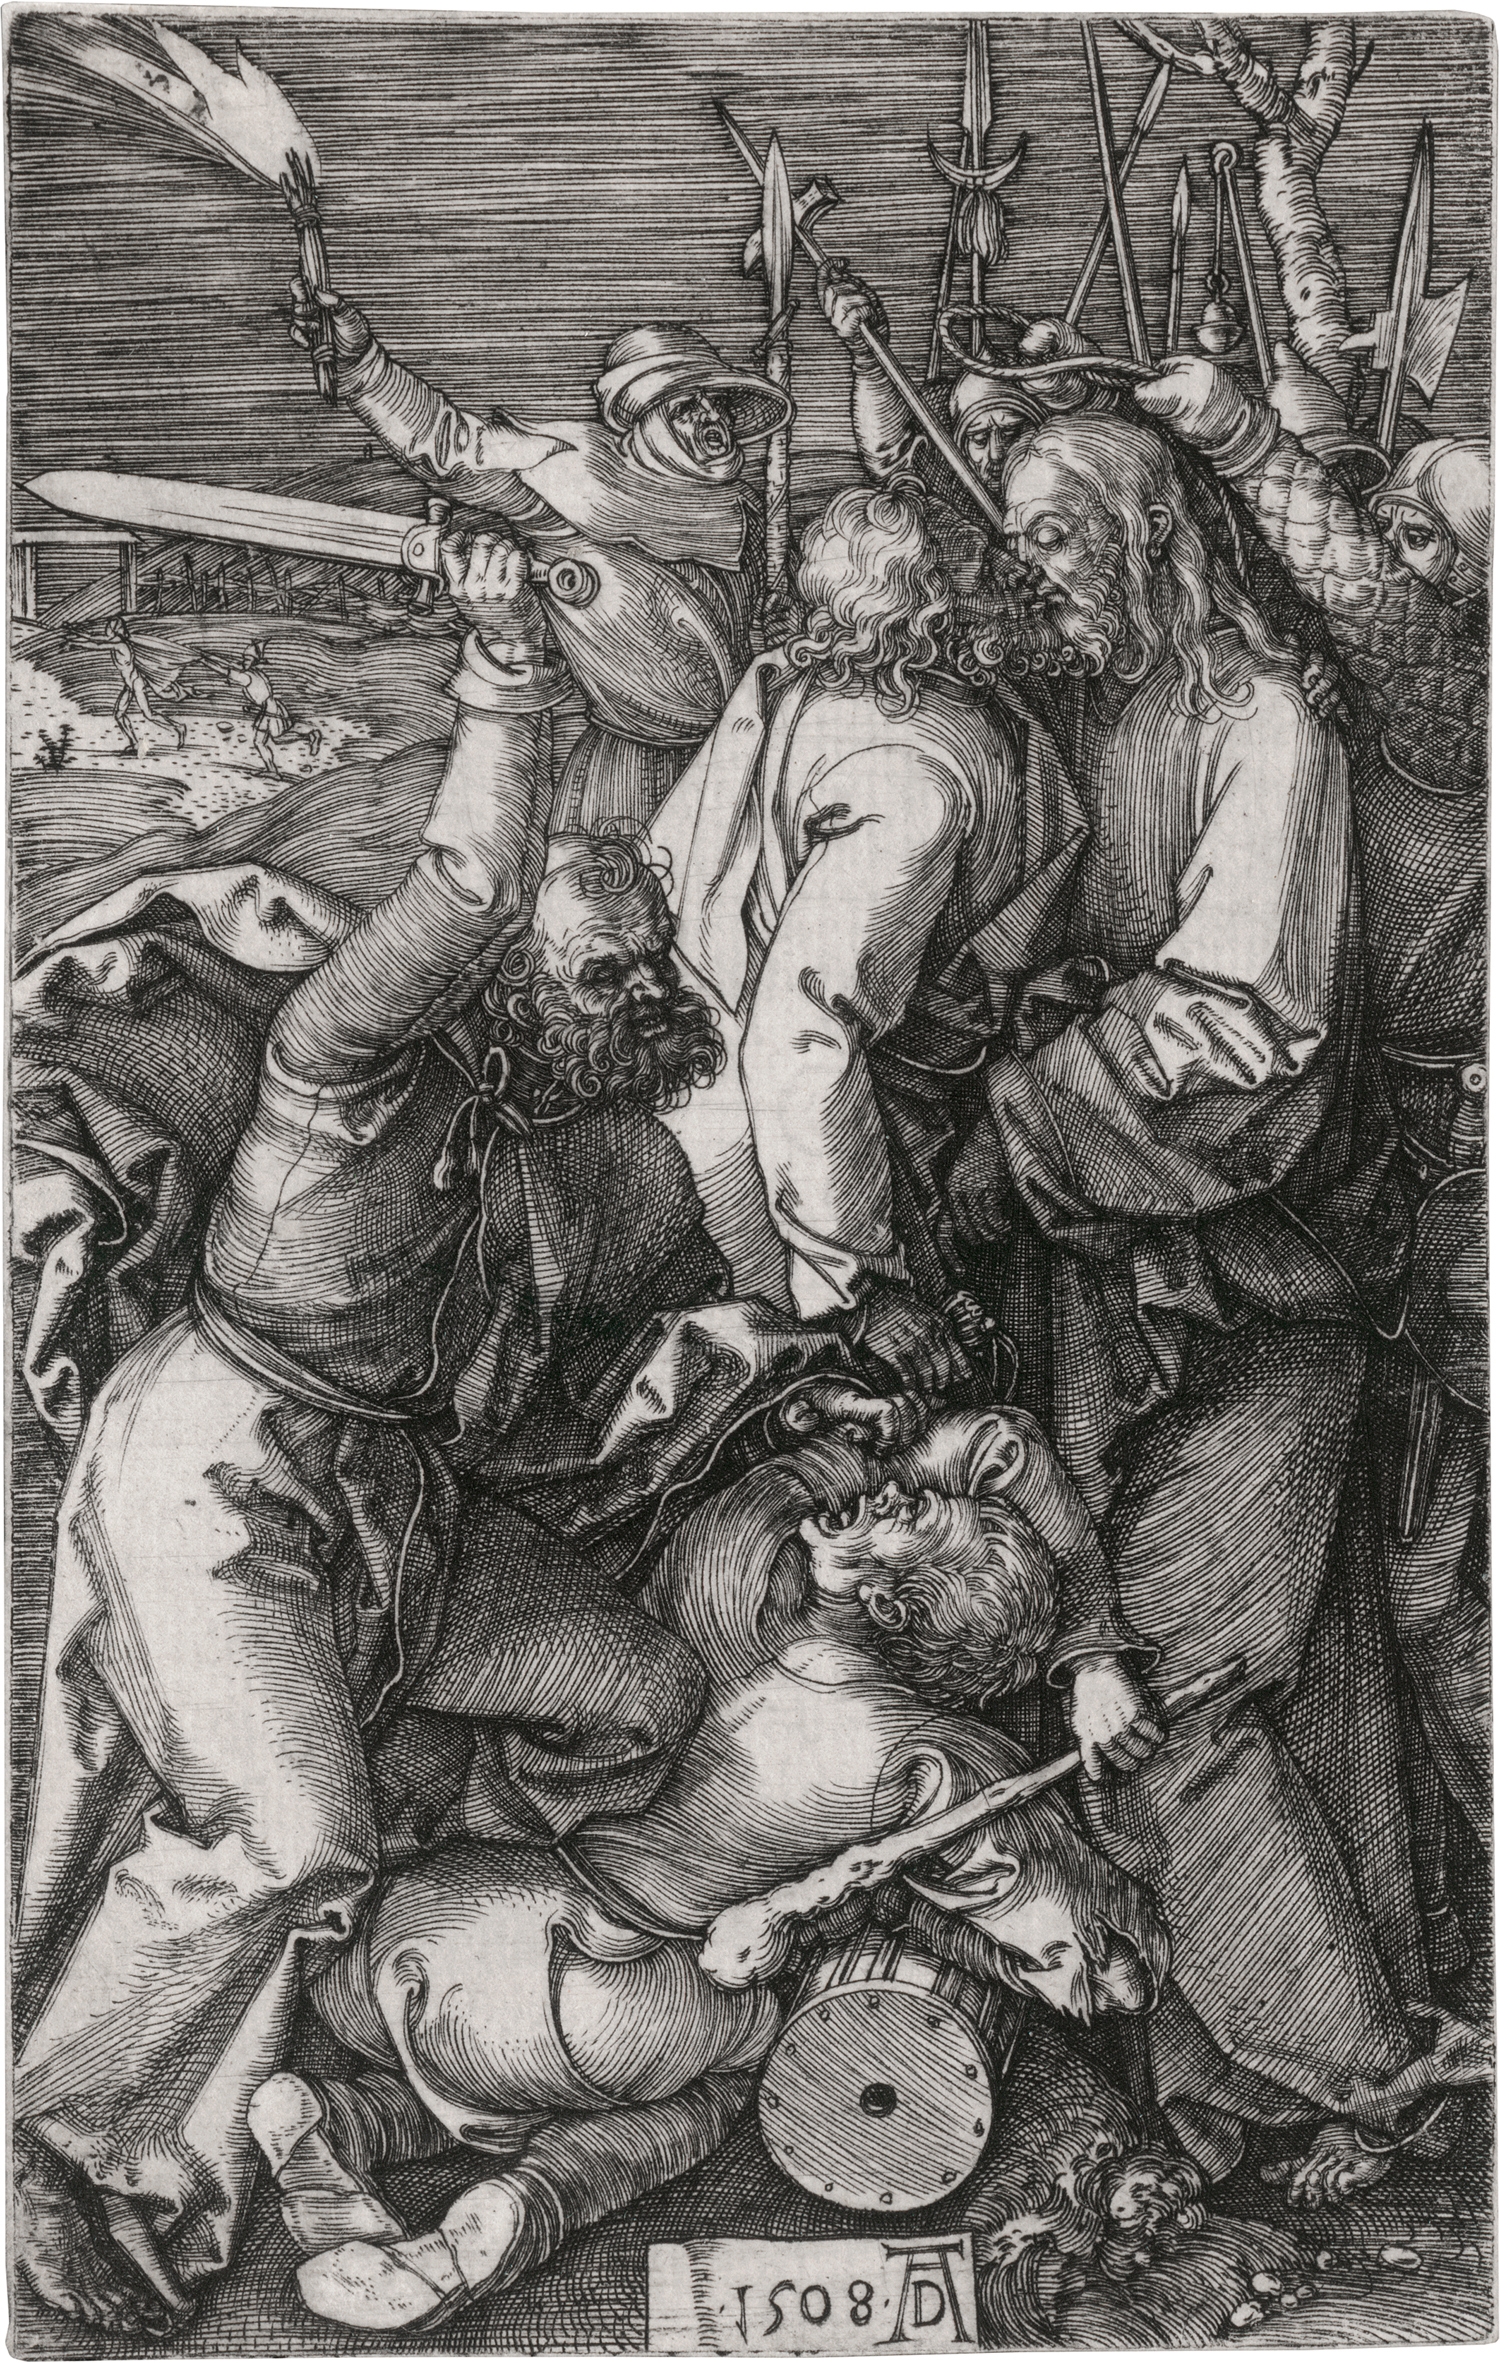 Gefangennahme Christi by Albrecht Dürer, 1508